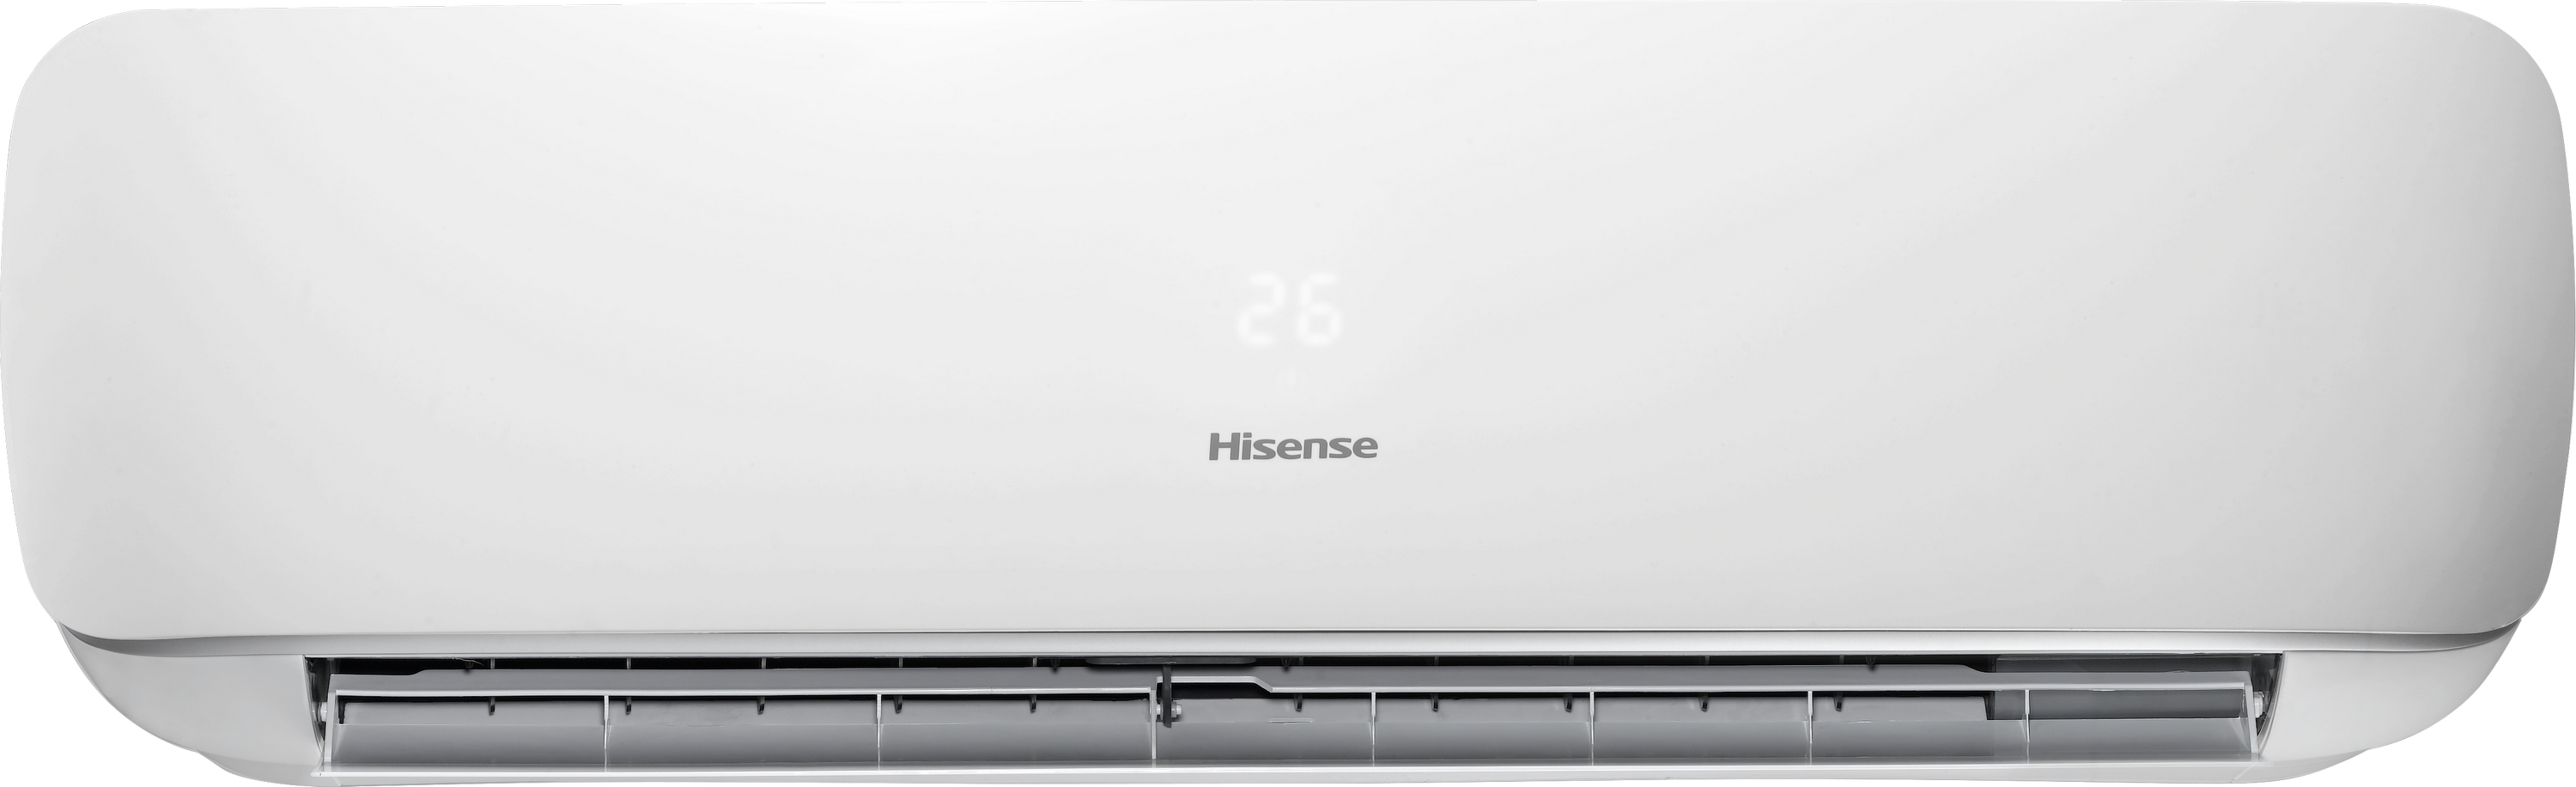 в продаже Кондиционер сплит-система Hisense Apple Pie R32 TG25VE0A - фото 3